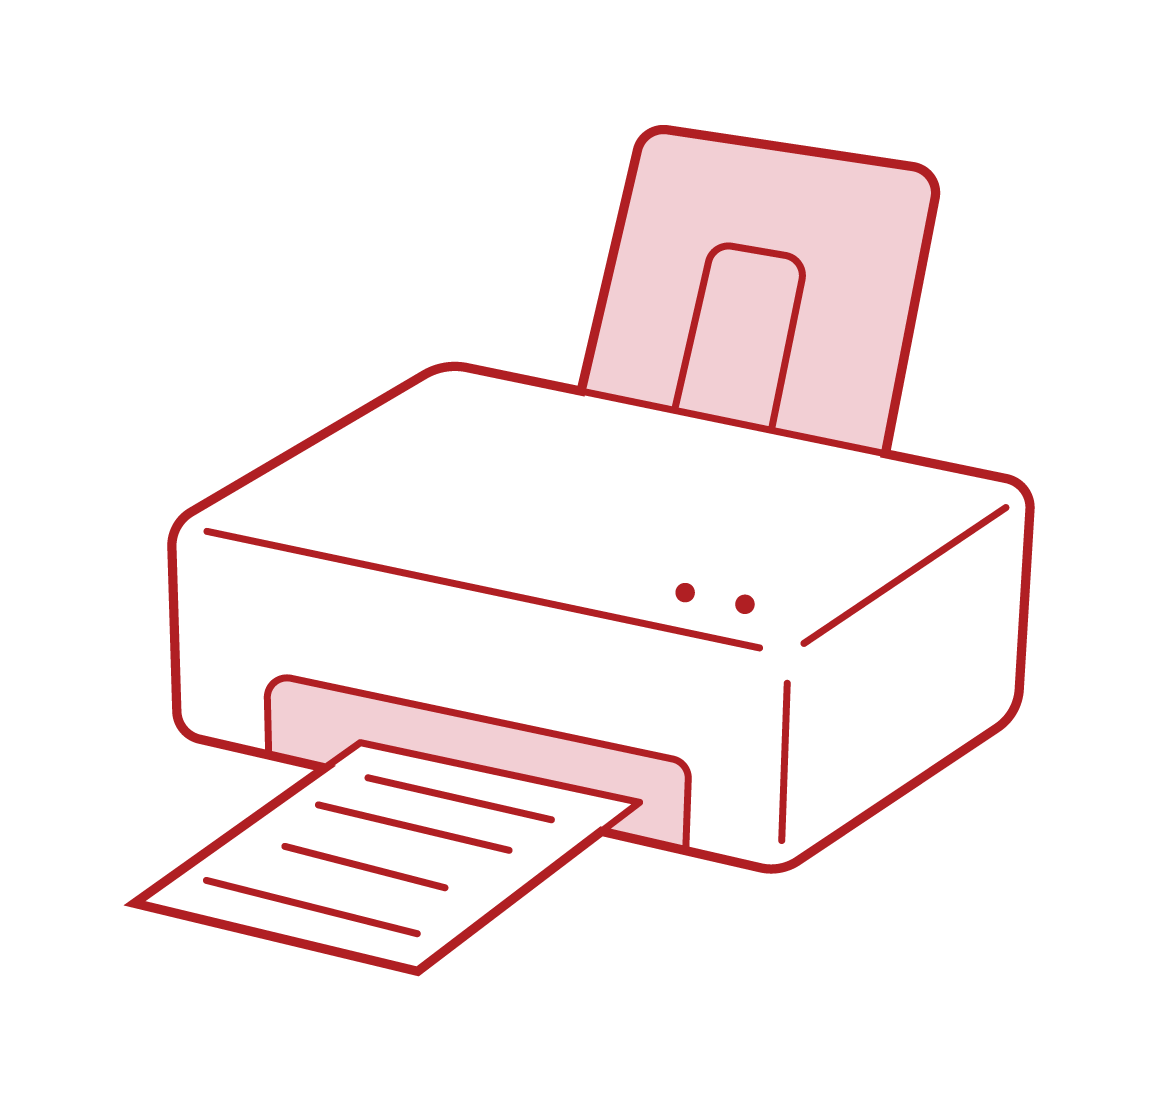 Illustration of a home printer